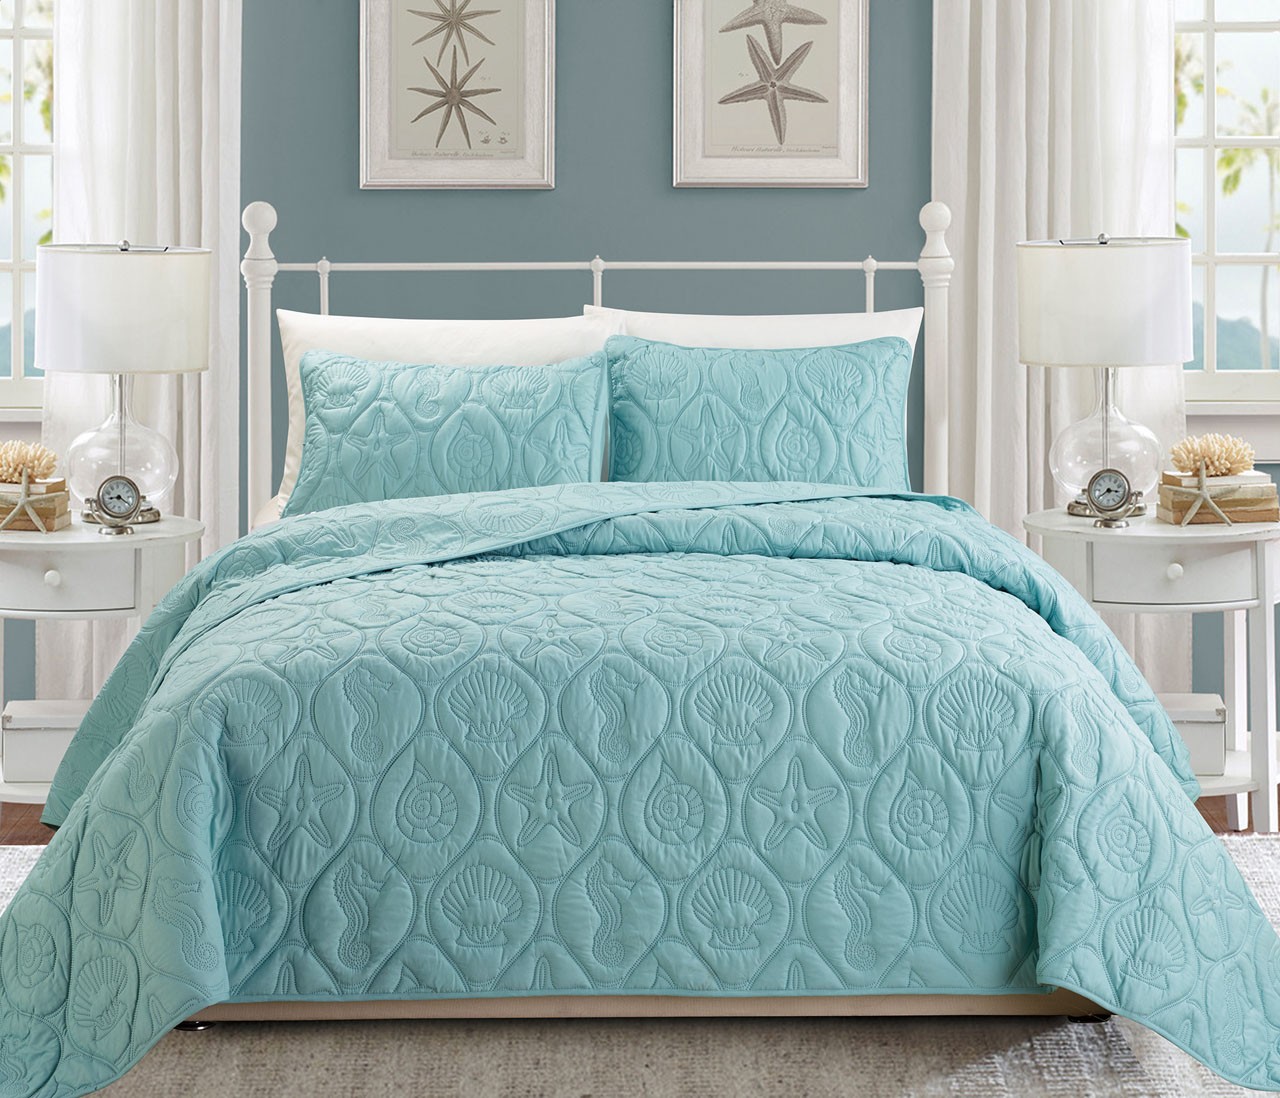 Seashell spa blue reversible bedspread quilt set